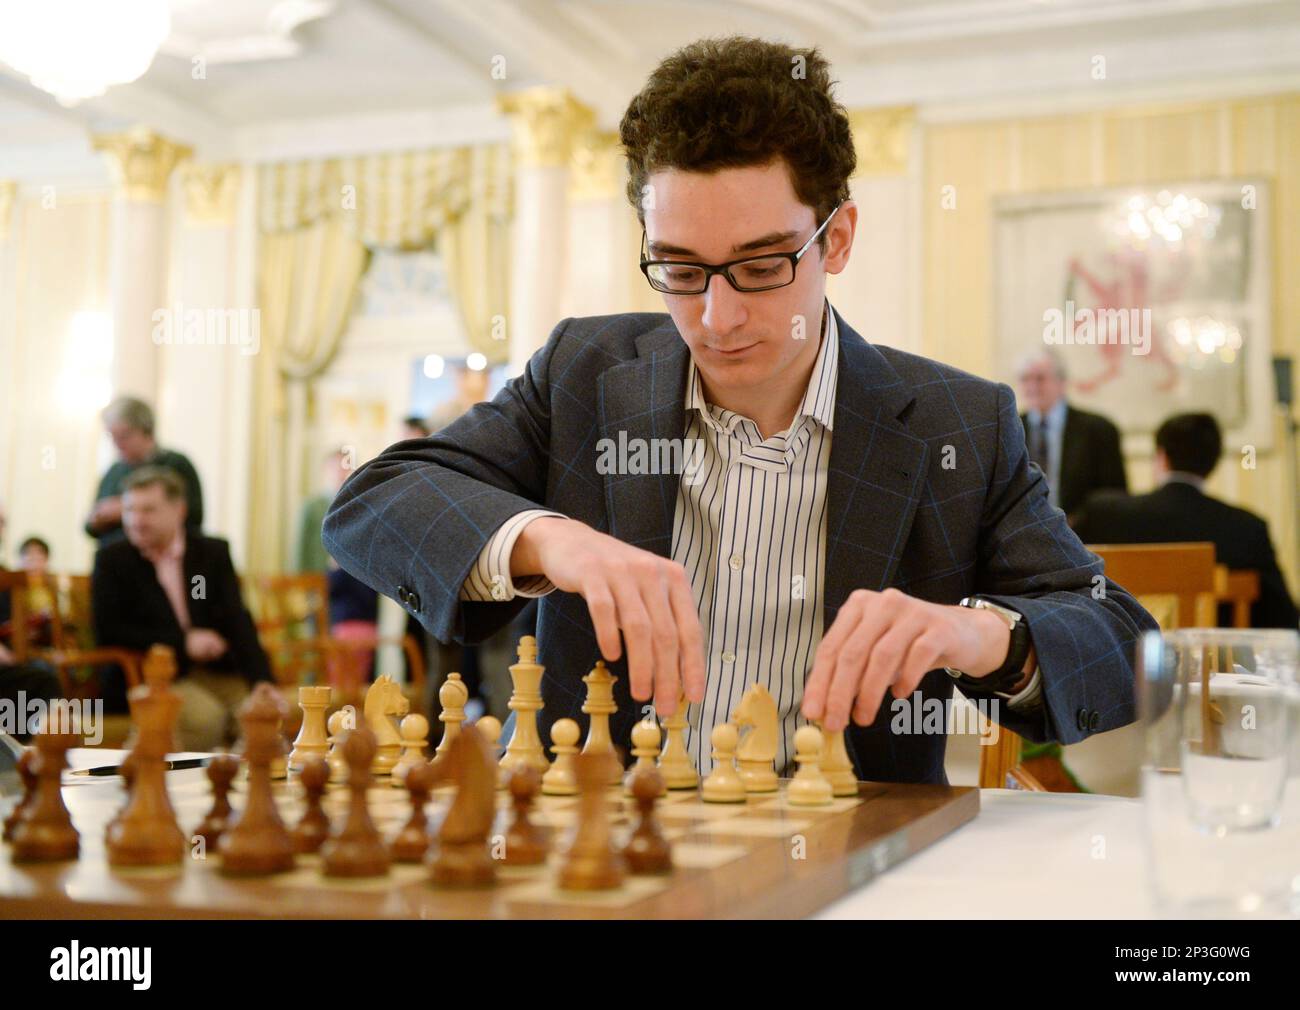 American Fabiano Caruana challenges for World Chess Championship